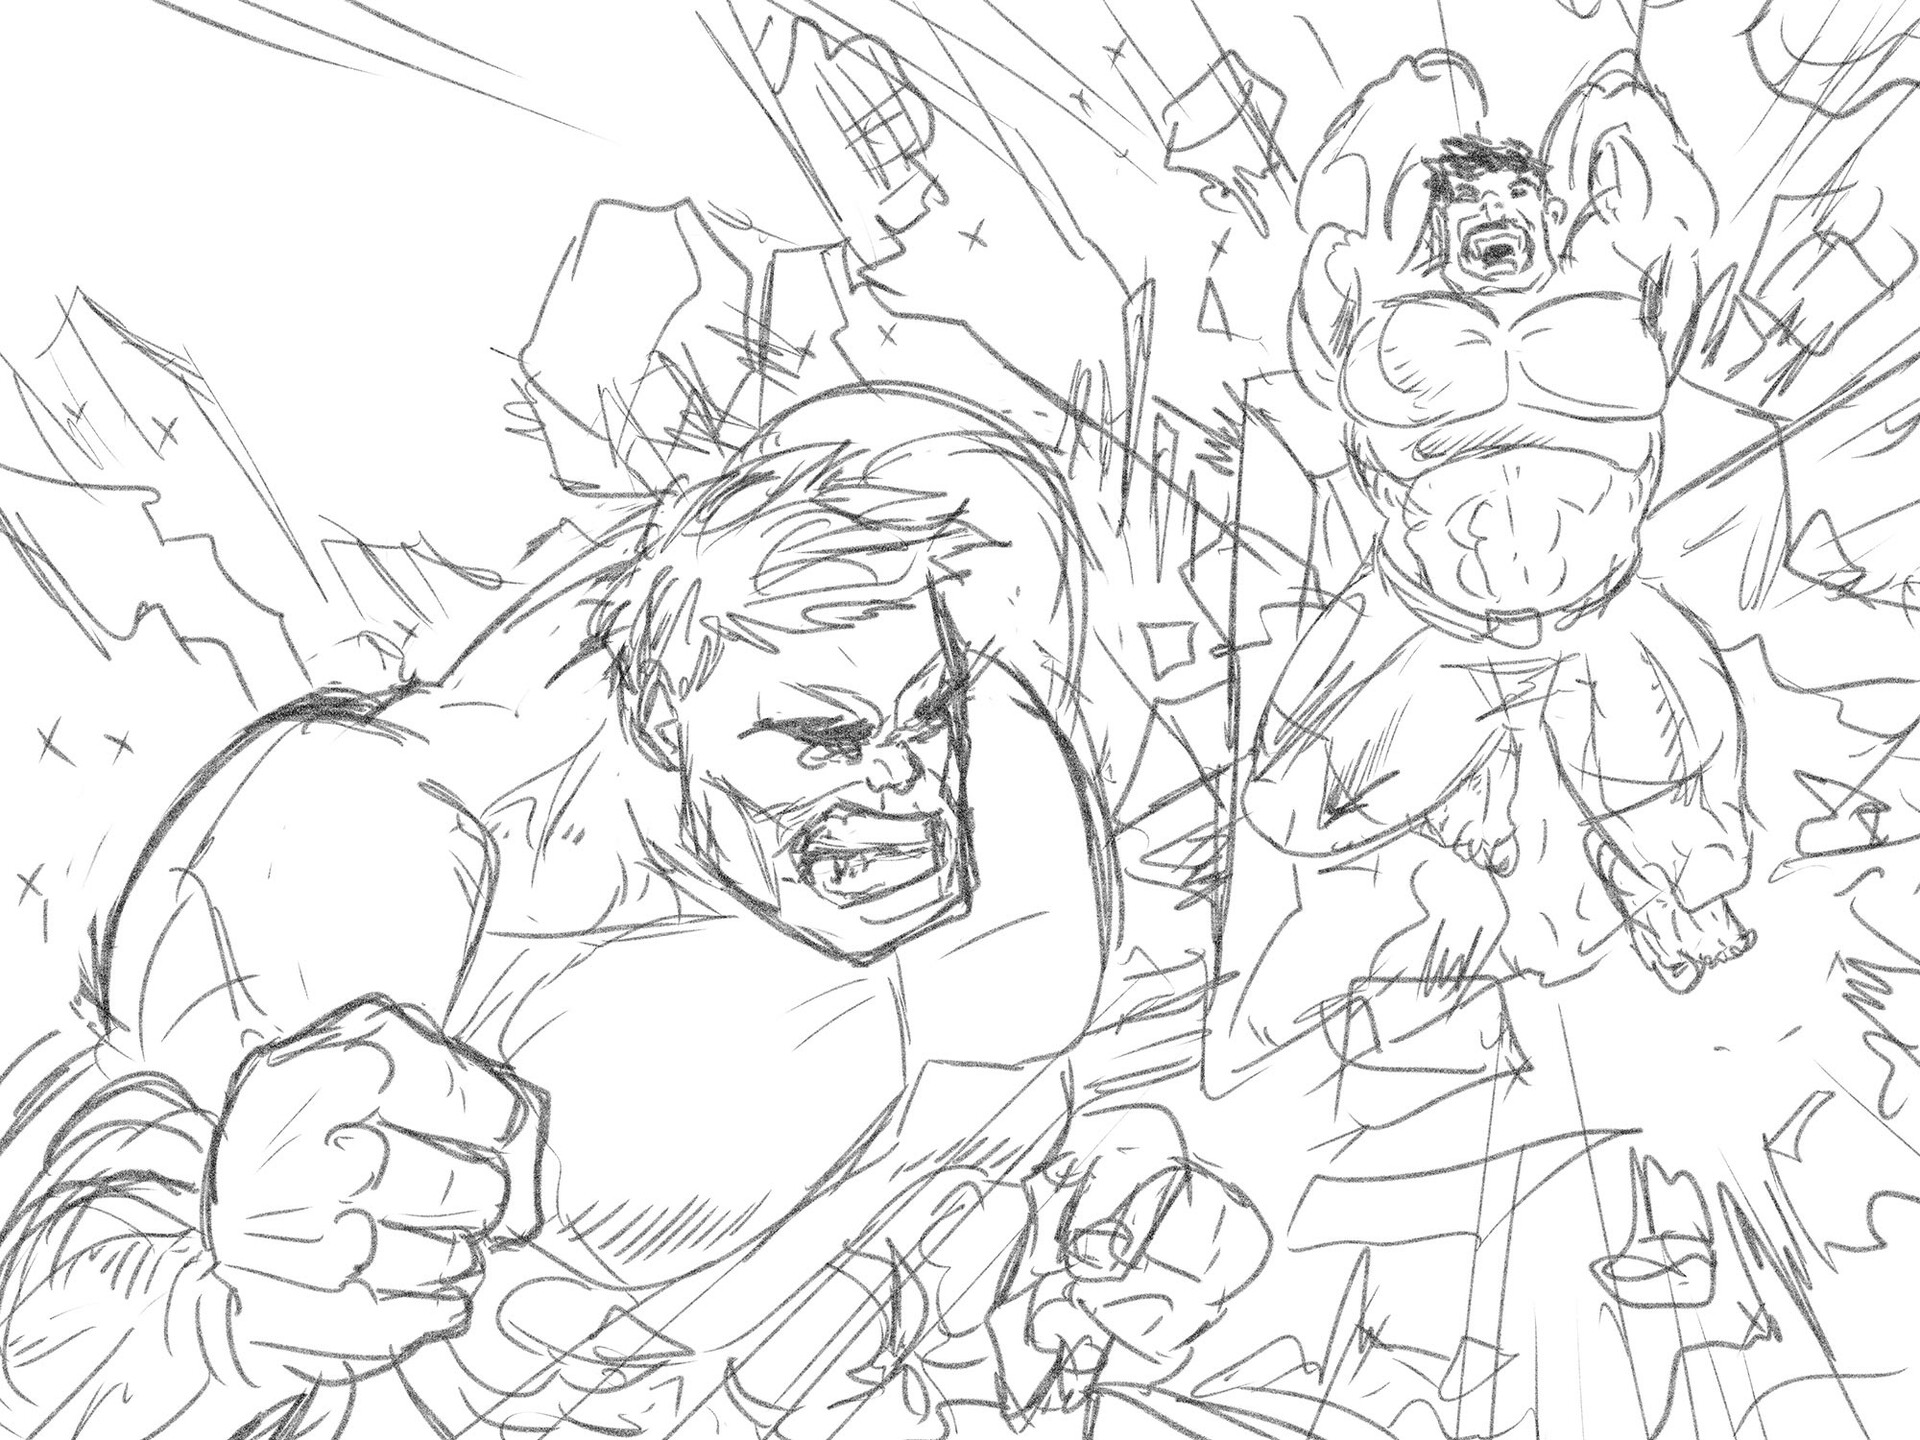 Hulk and Red Hulk art : r/drawing